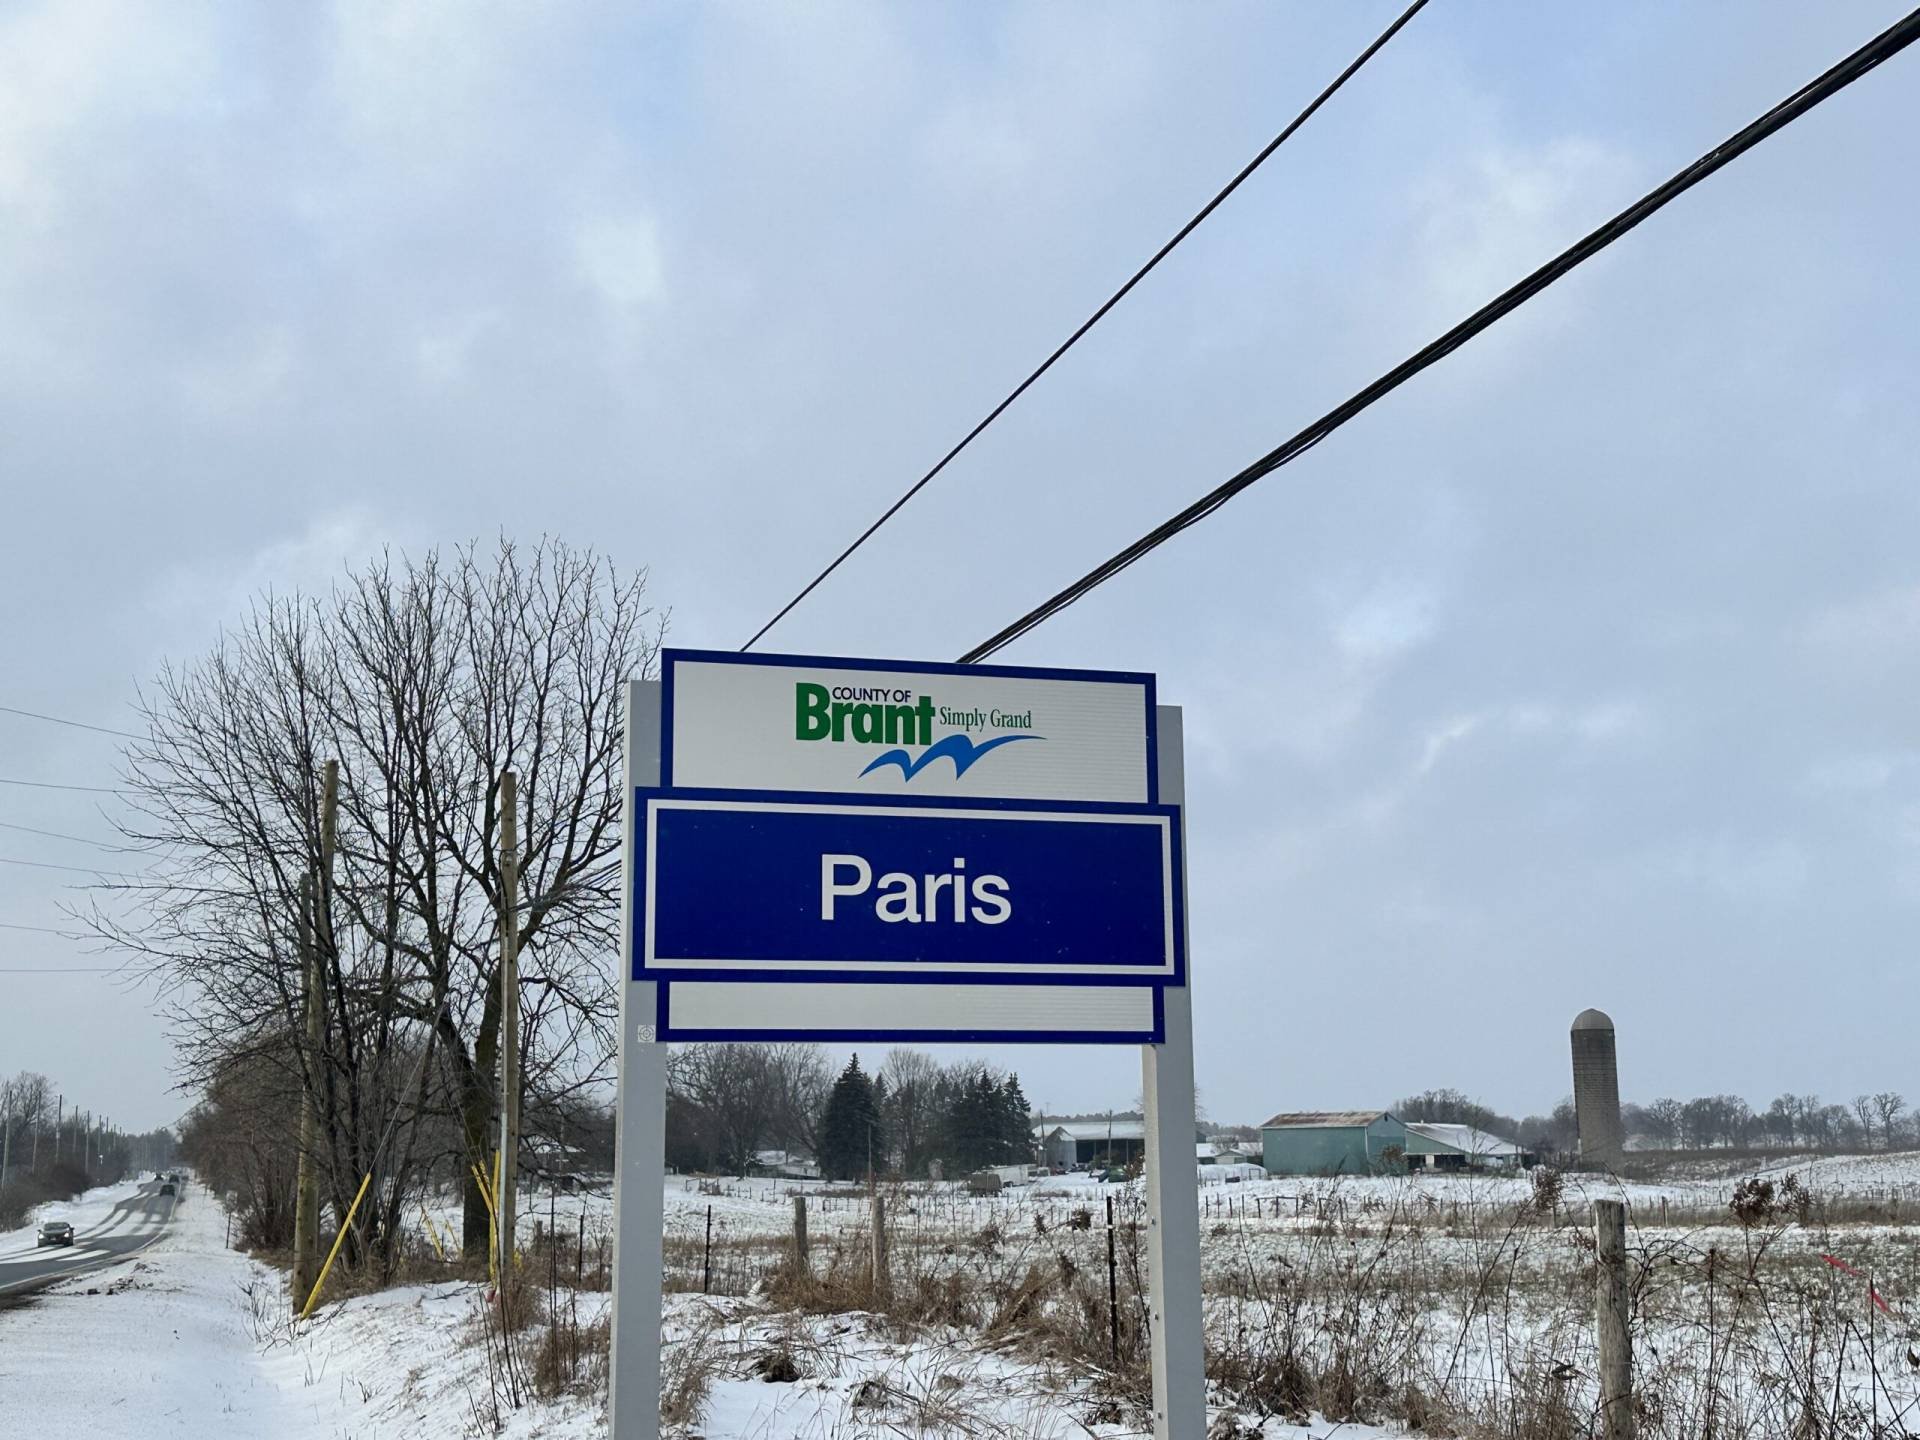 Paris, Brant Highway sign board